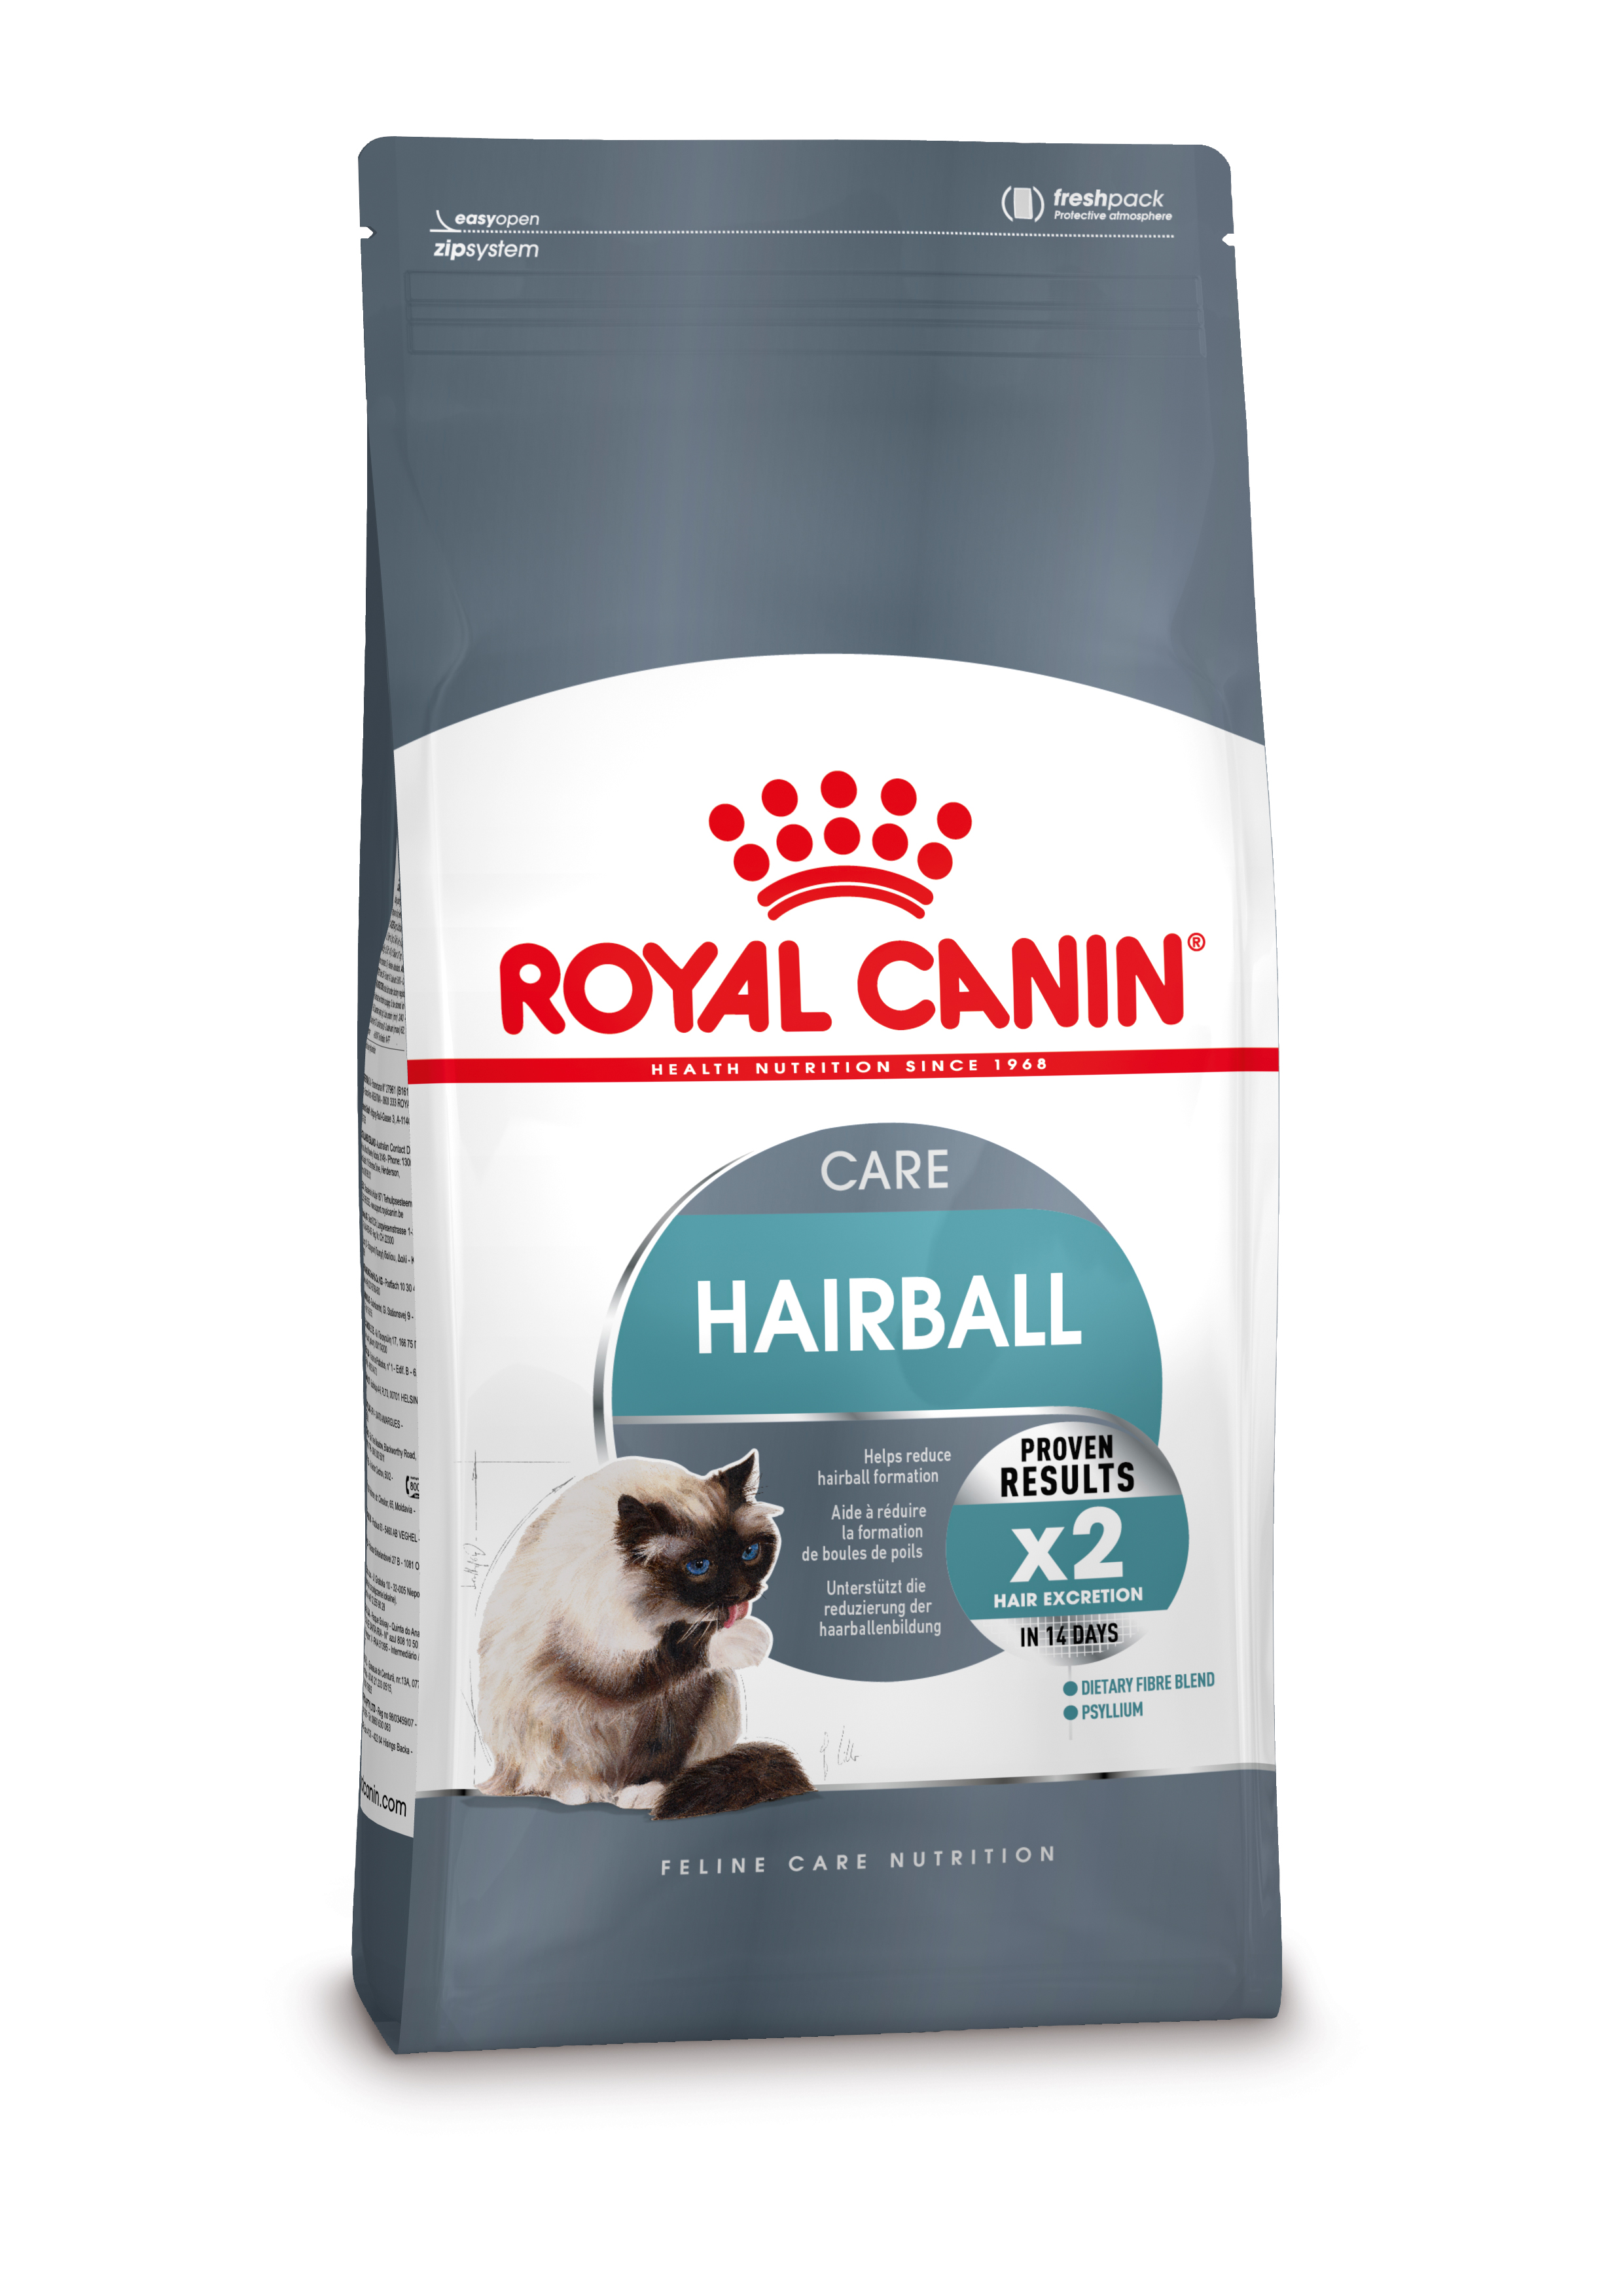 Afbeelding Royal Canin Hairball Care kattenvoer 2 kg door Brekz.nl